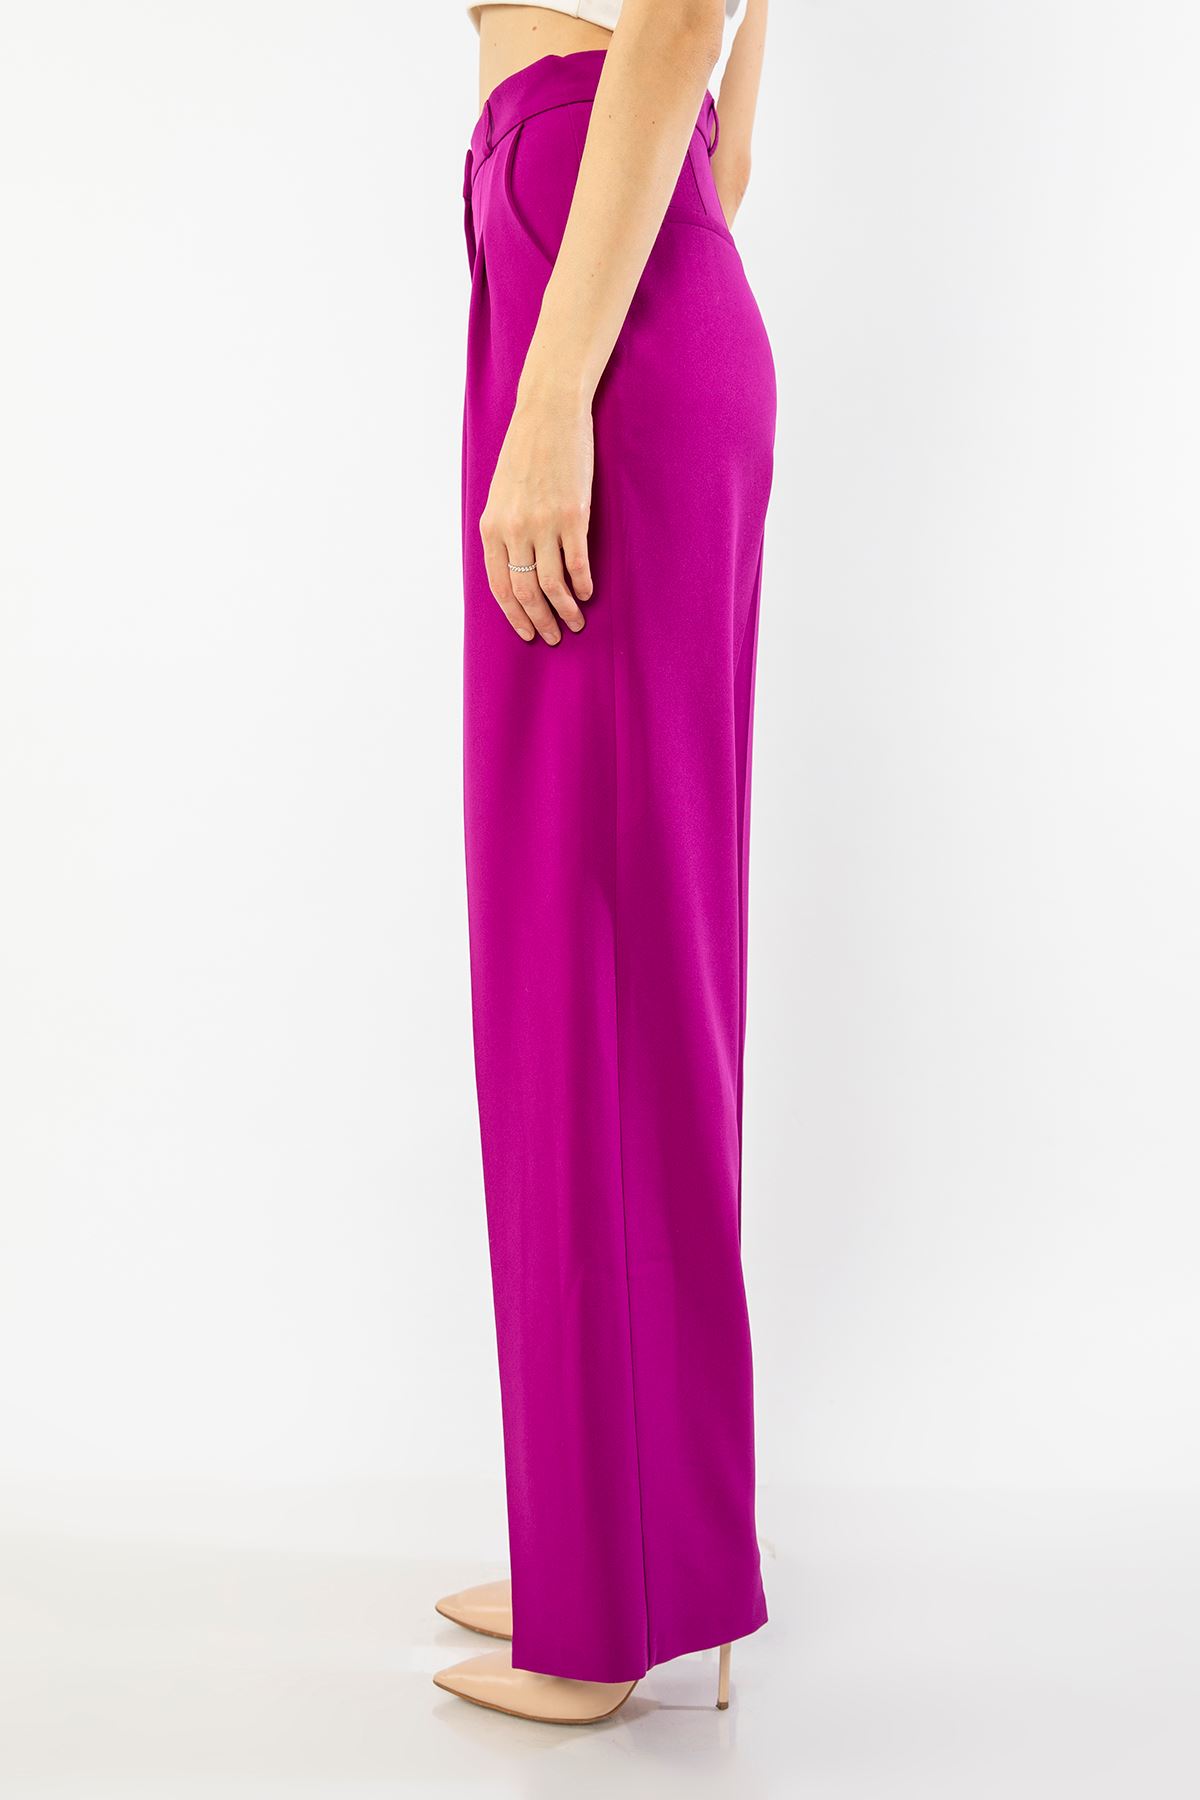 Atlas Fabric Maxi Wide Palazzo Women'S Trouser - Purple